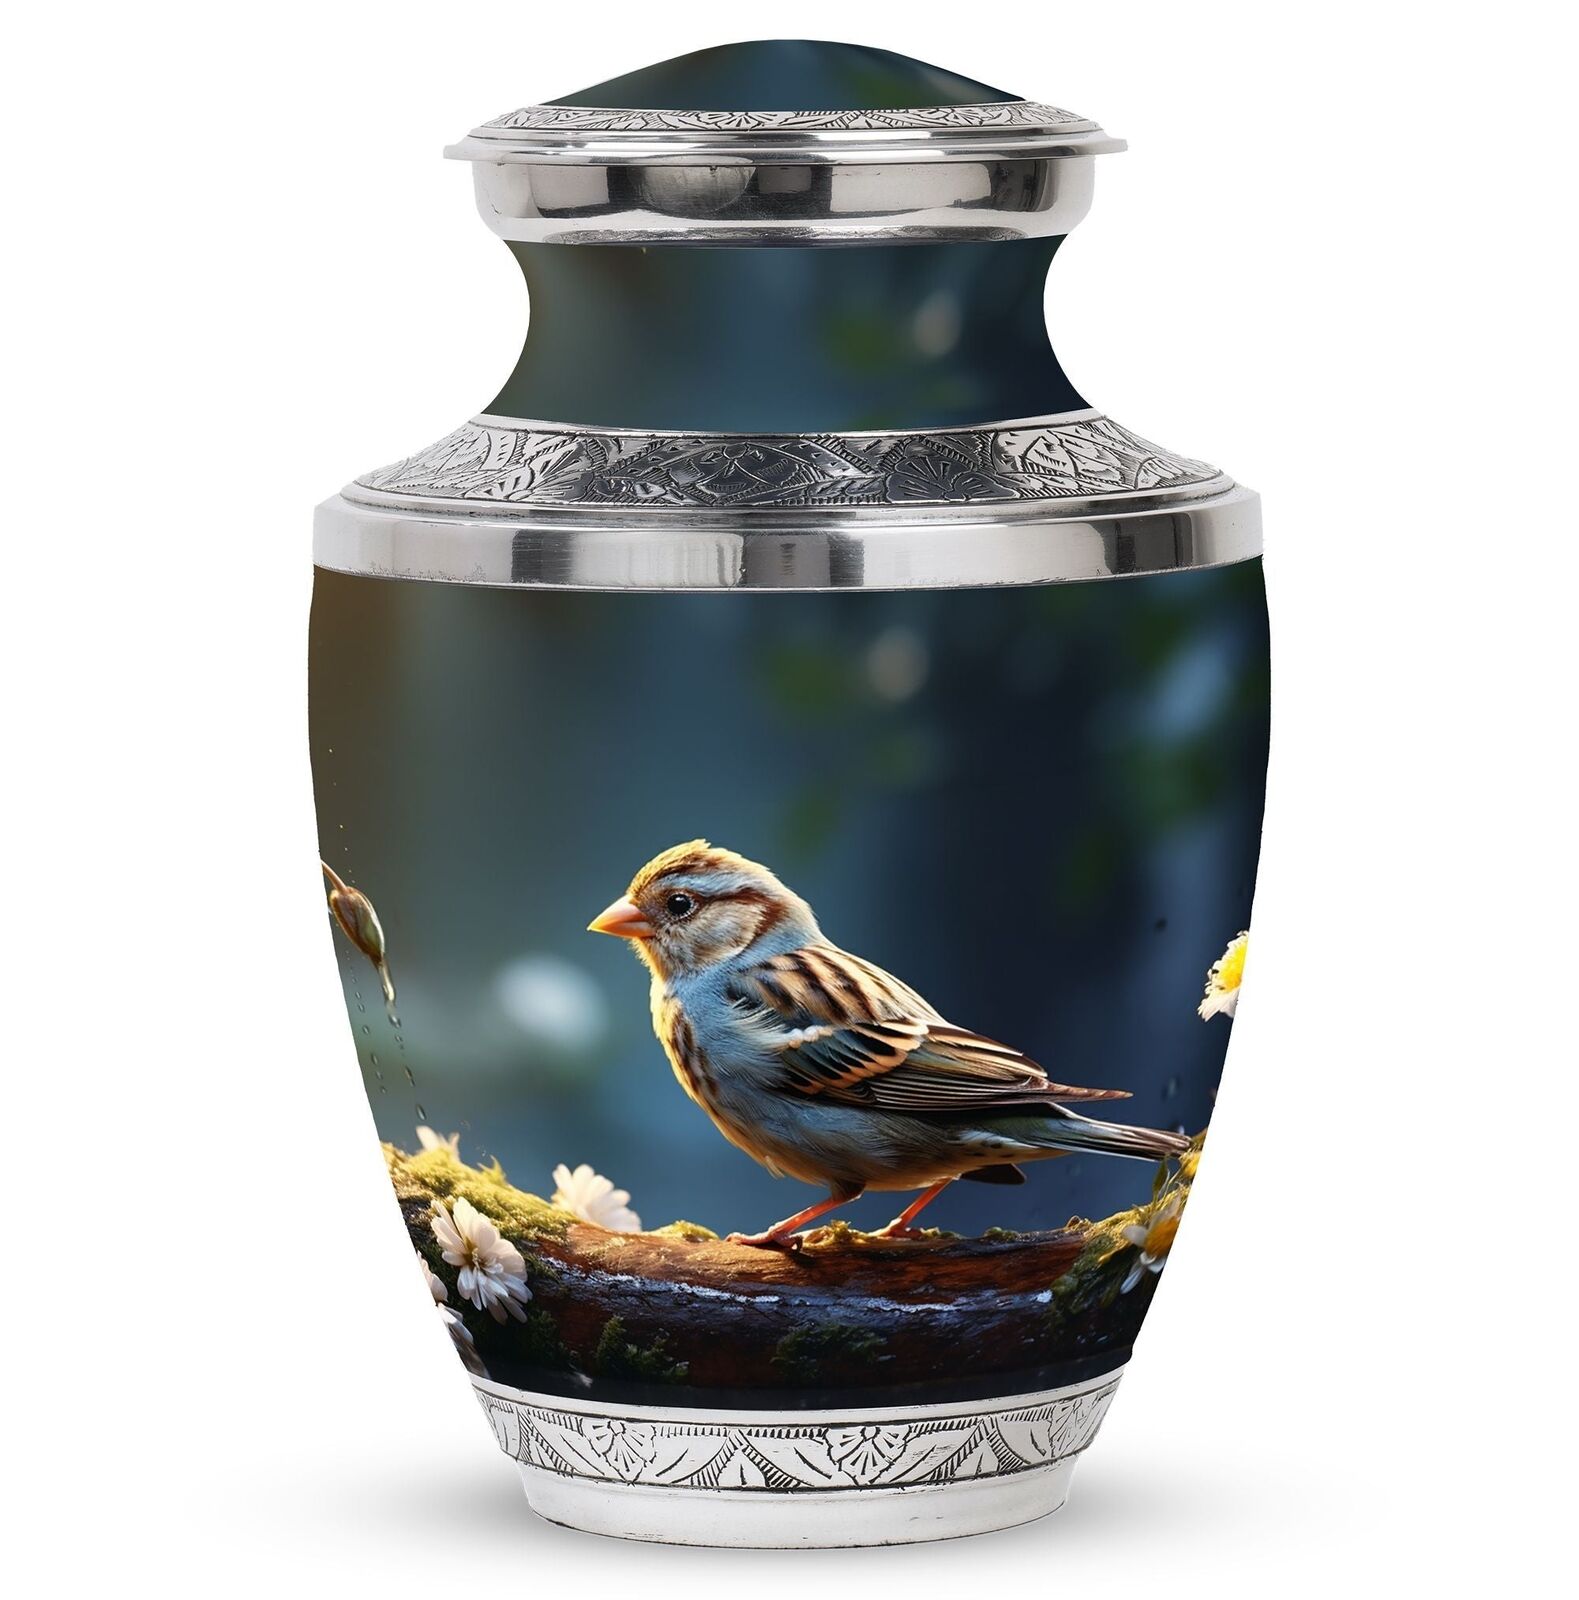 Sparrow Keepsake Cremation Urn: Cherished Remembrance